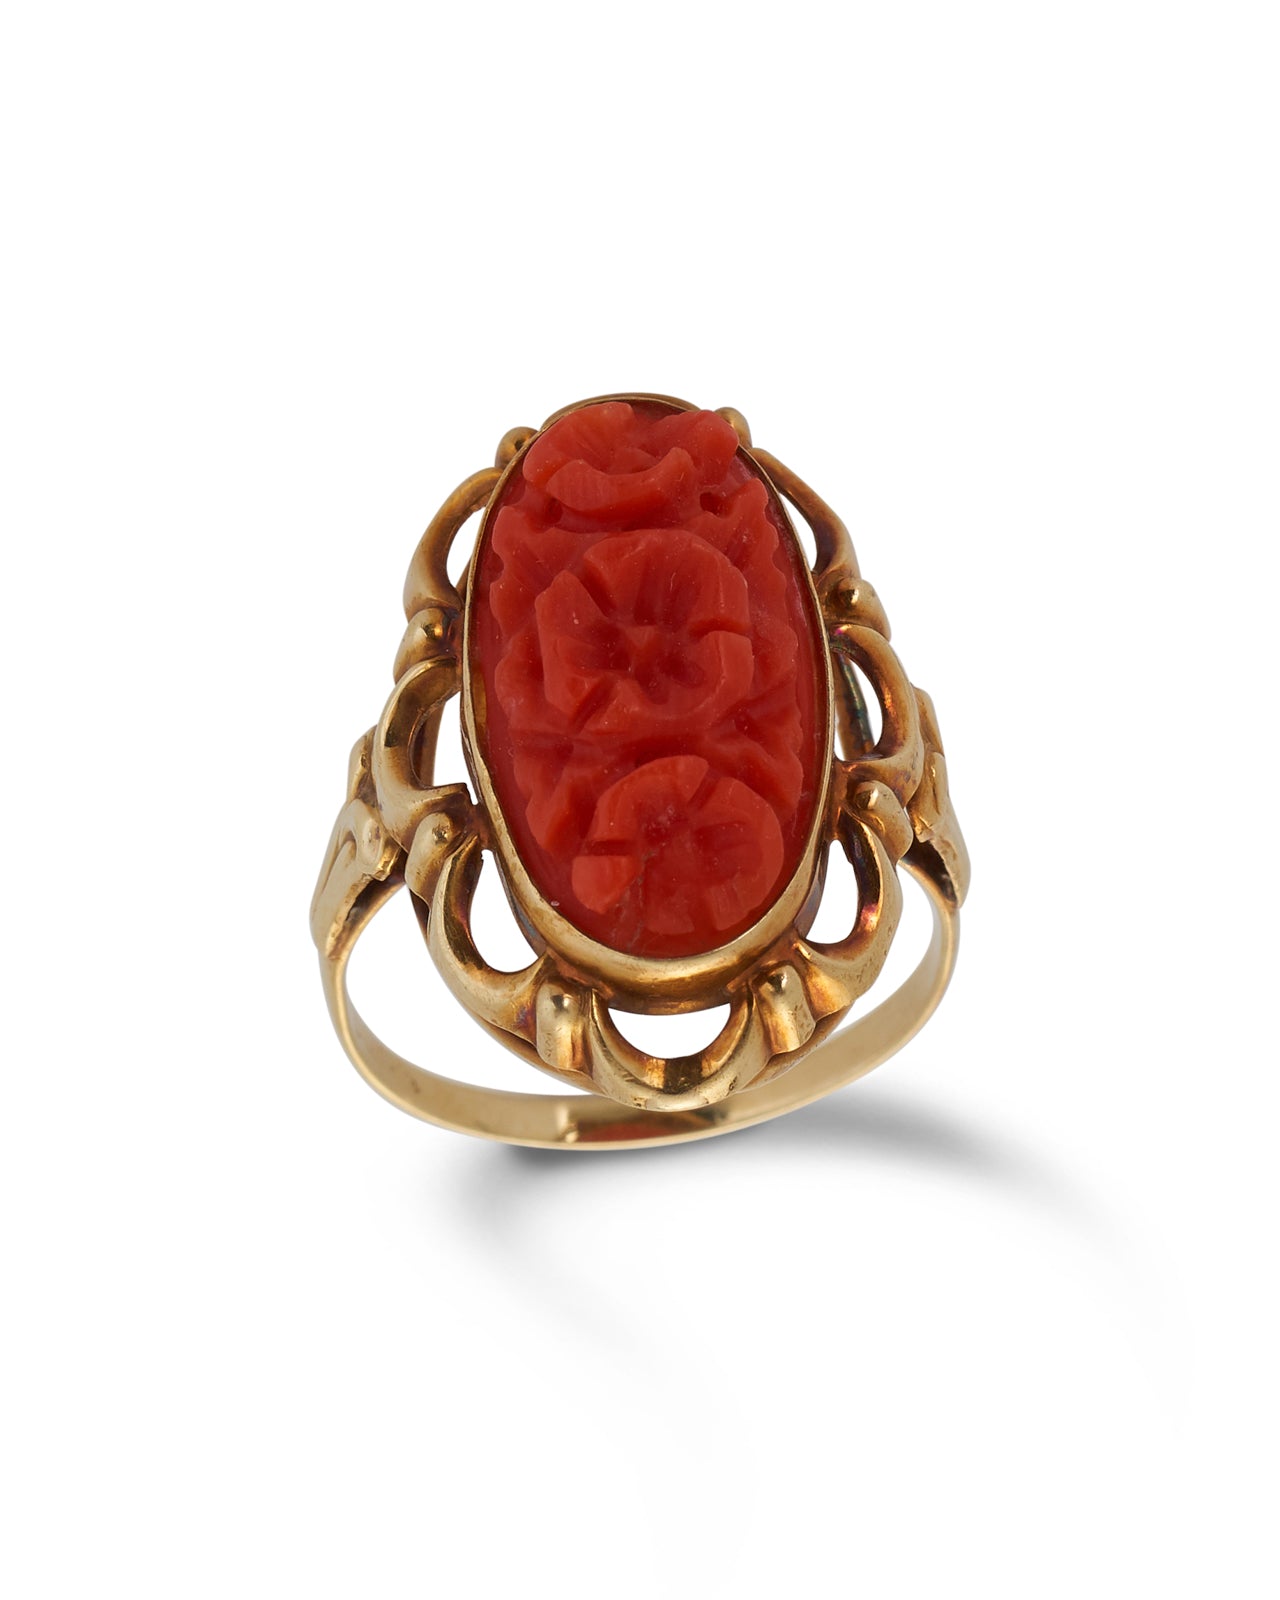 Vintage Italian Coral Ring